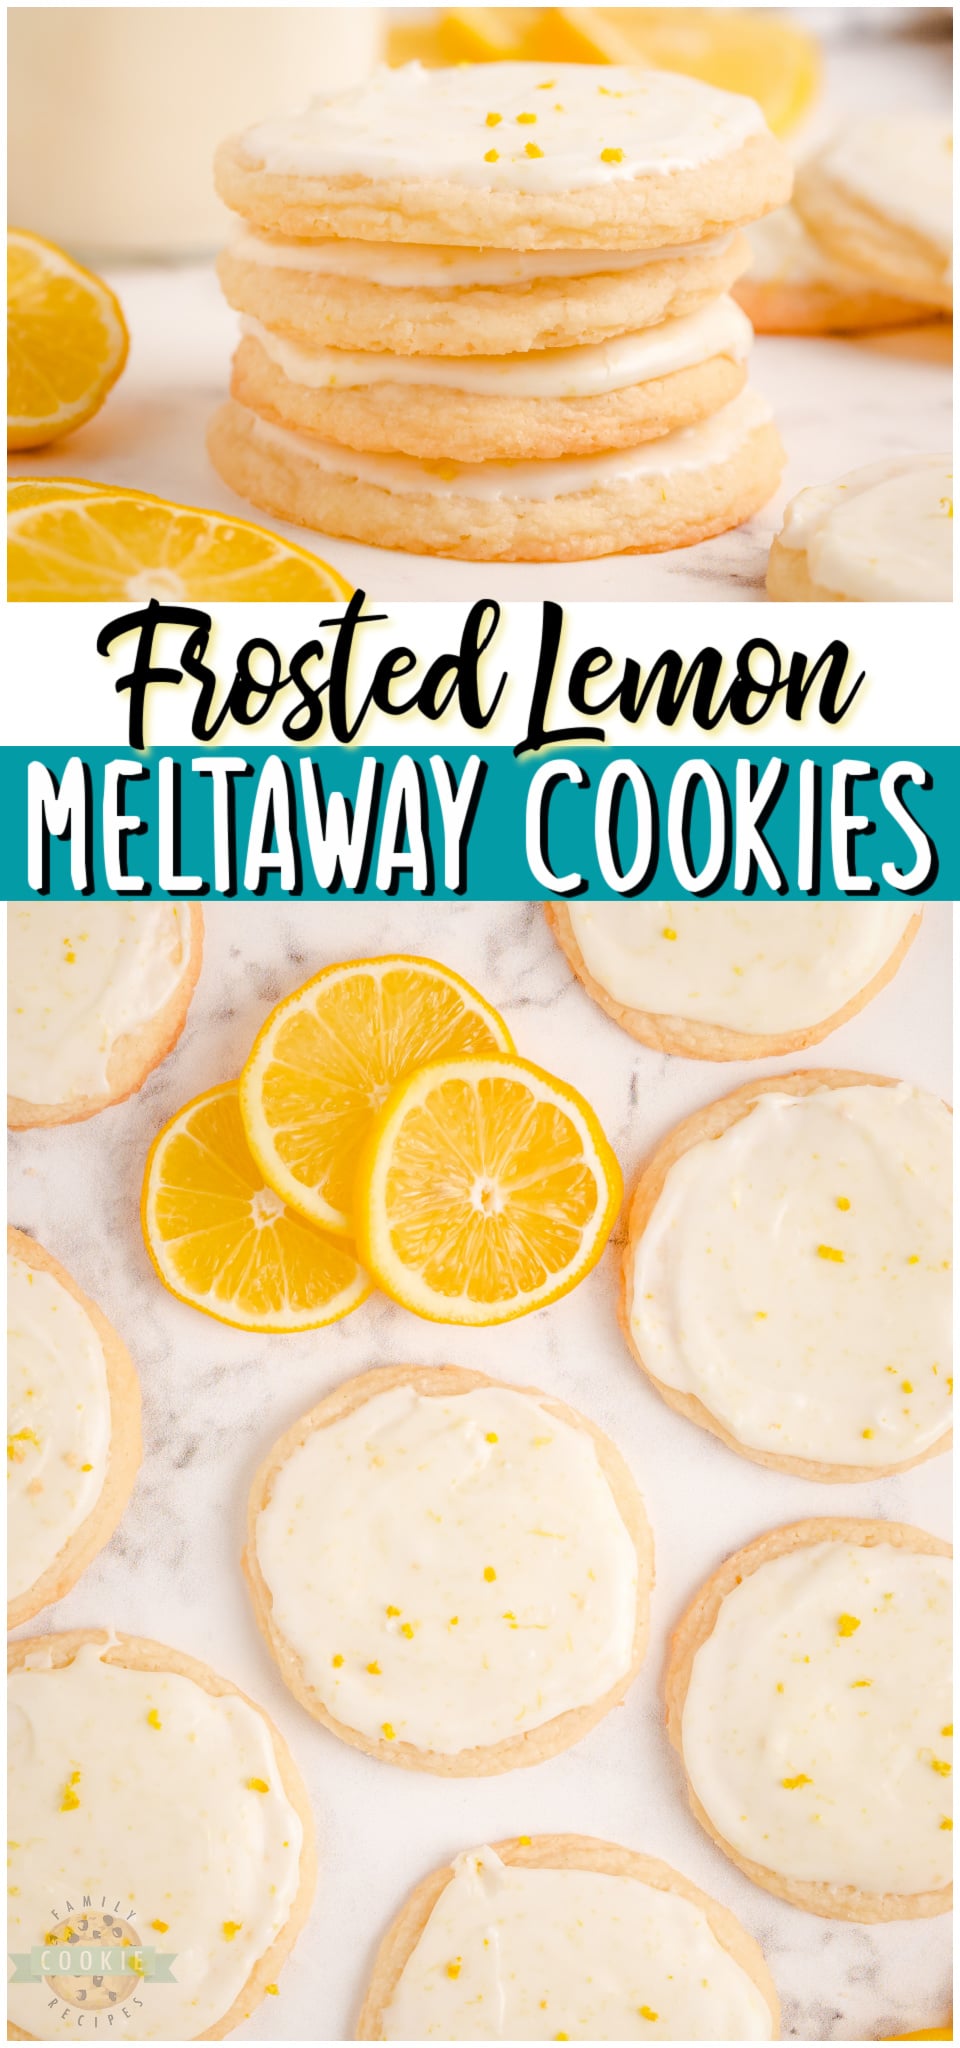 Lemon Meltaways made with simple ingredients like butter, flour, lemon zest & cornstarch. Soft, tender meltaway cookies topped with a lovely fresh lemon glaze! 